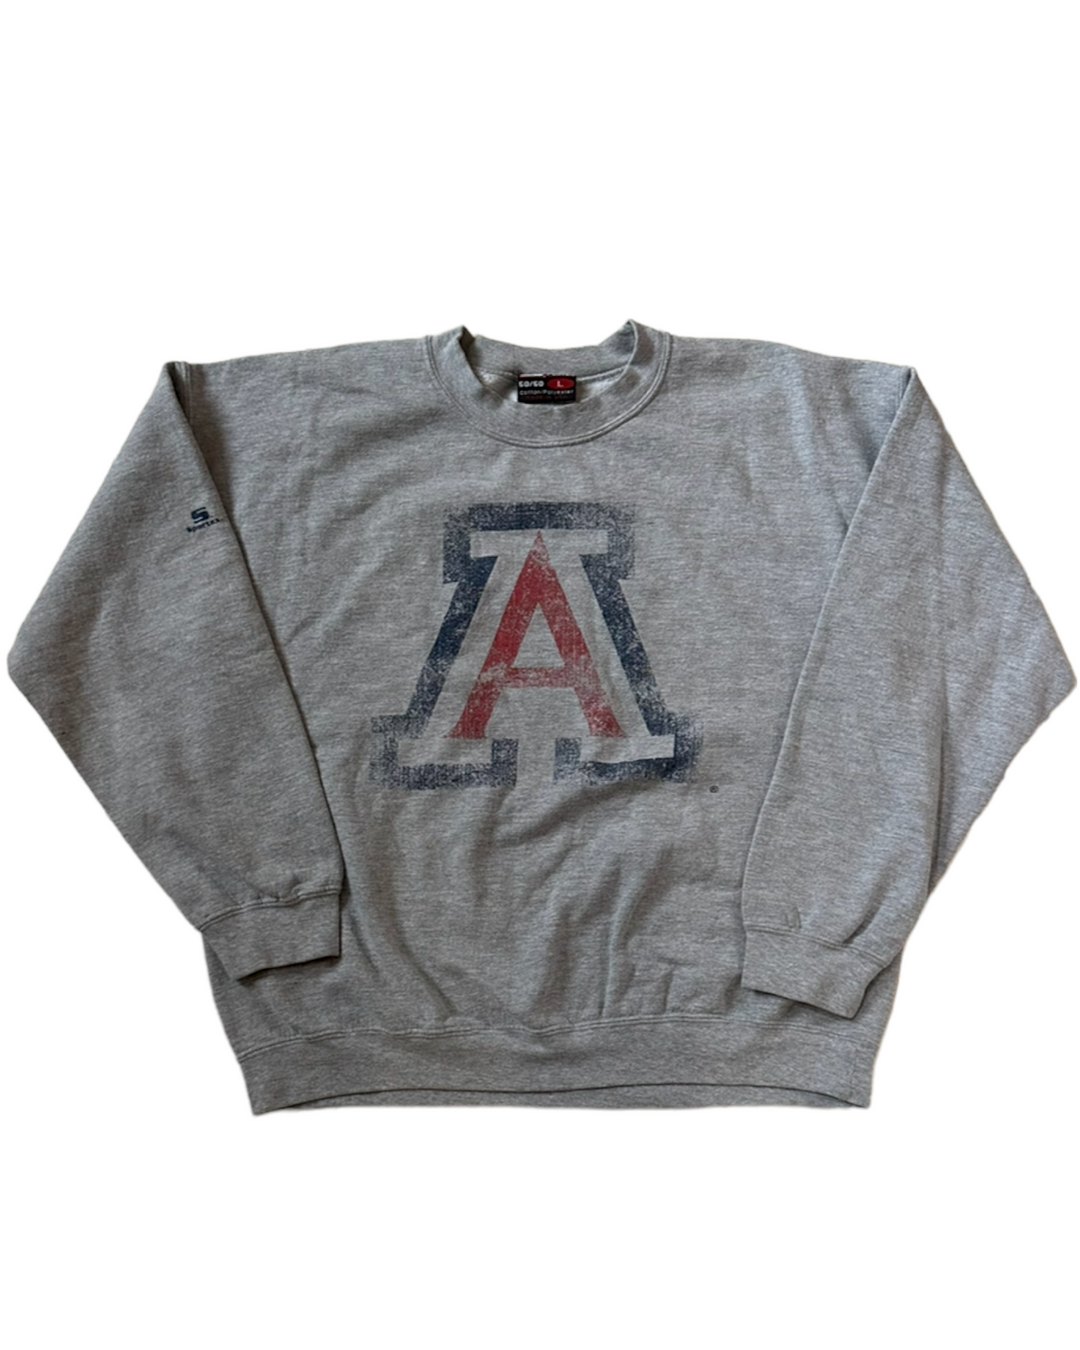 Arizona Vintage Sweatshirt